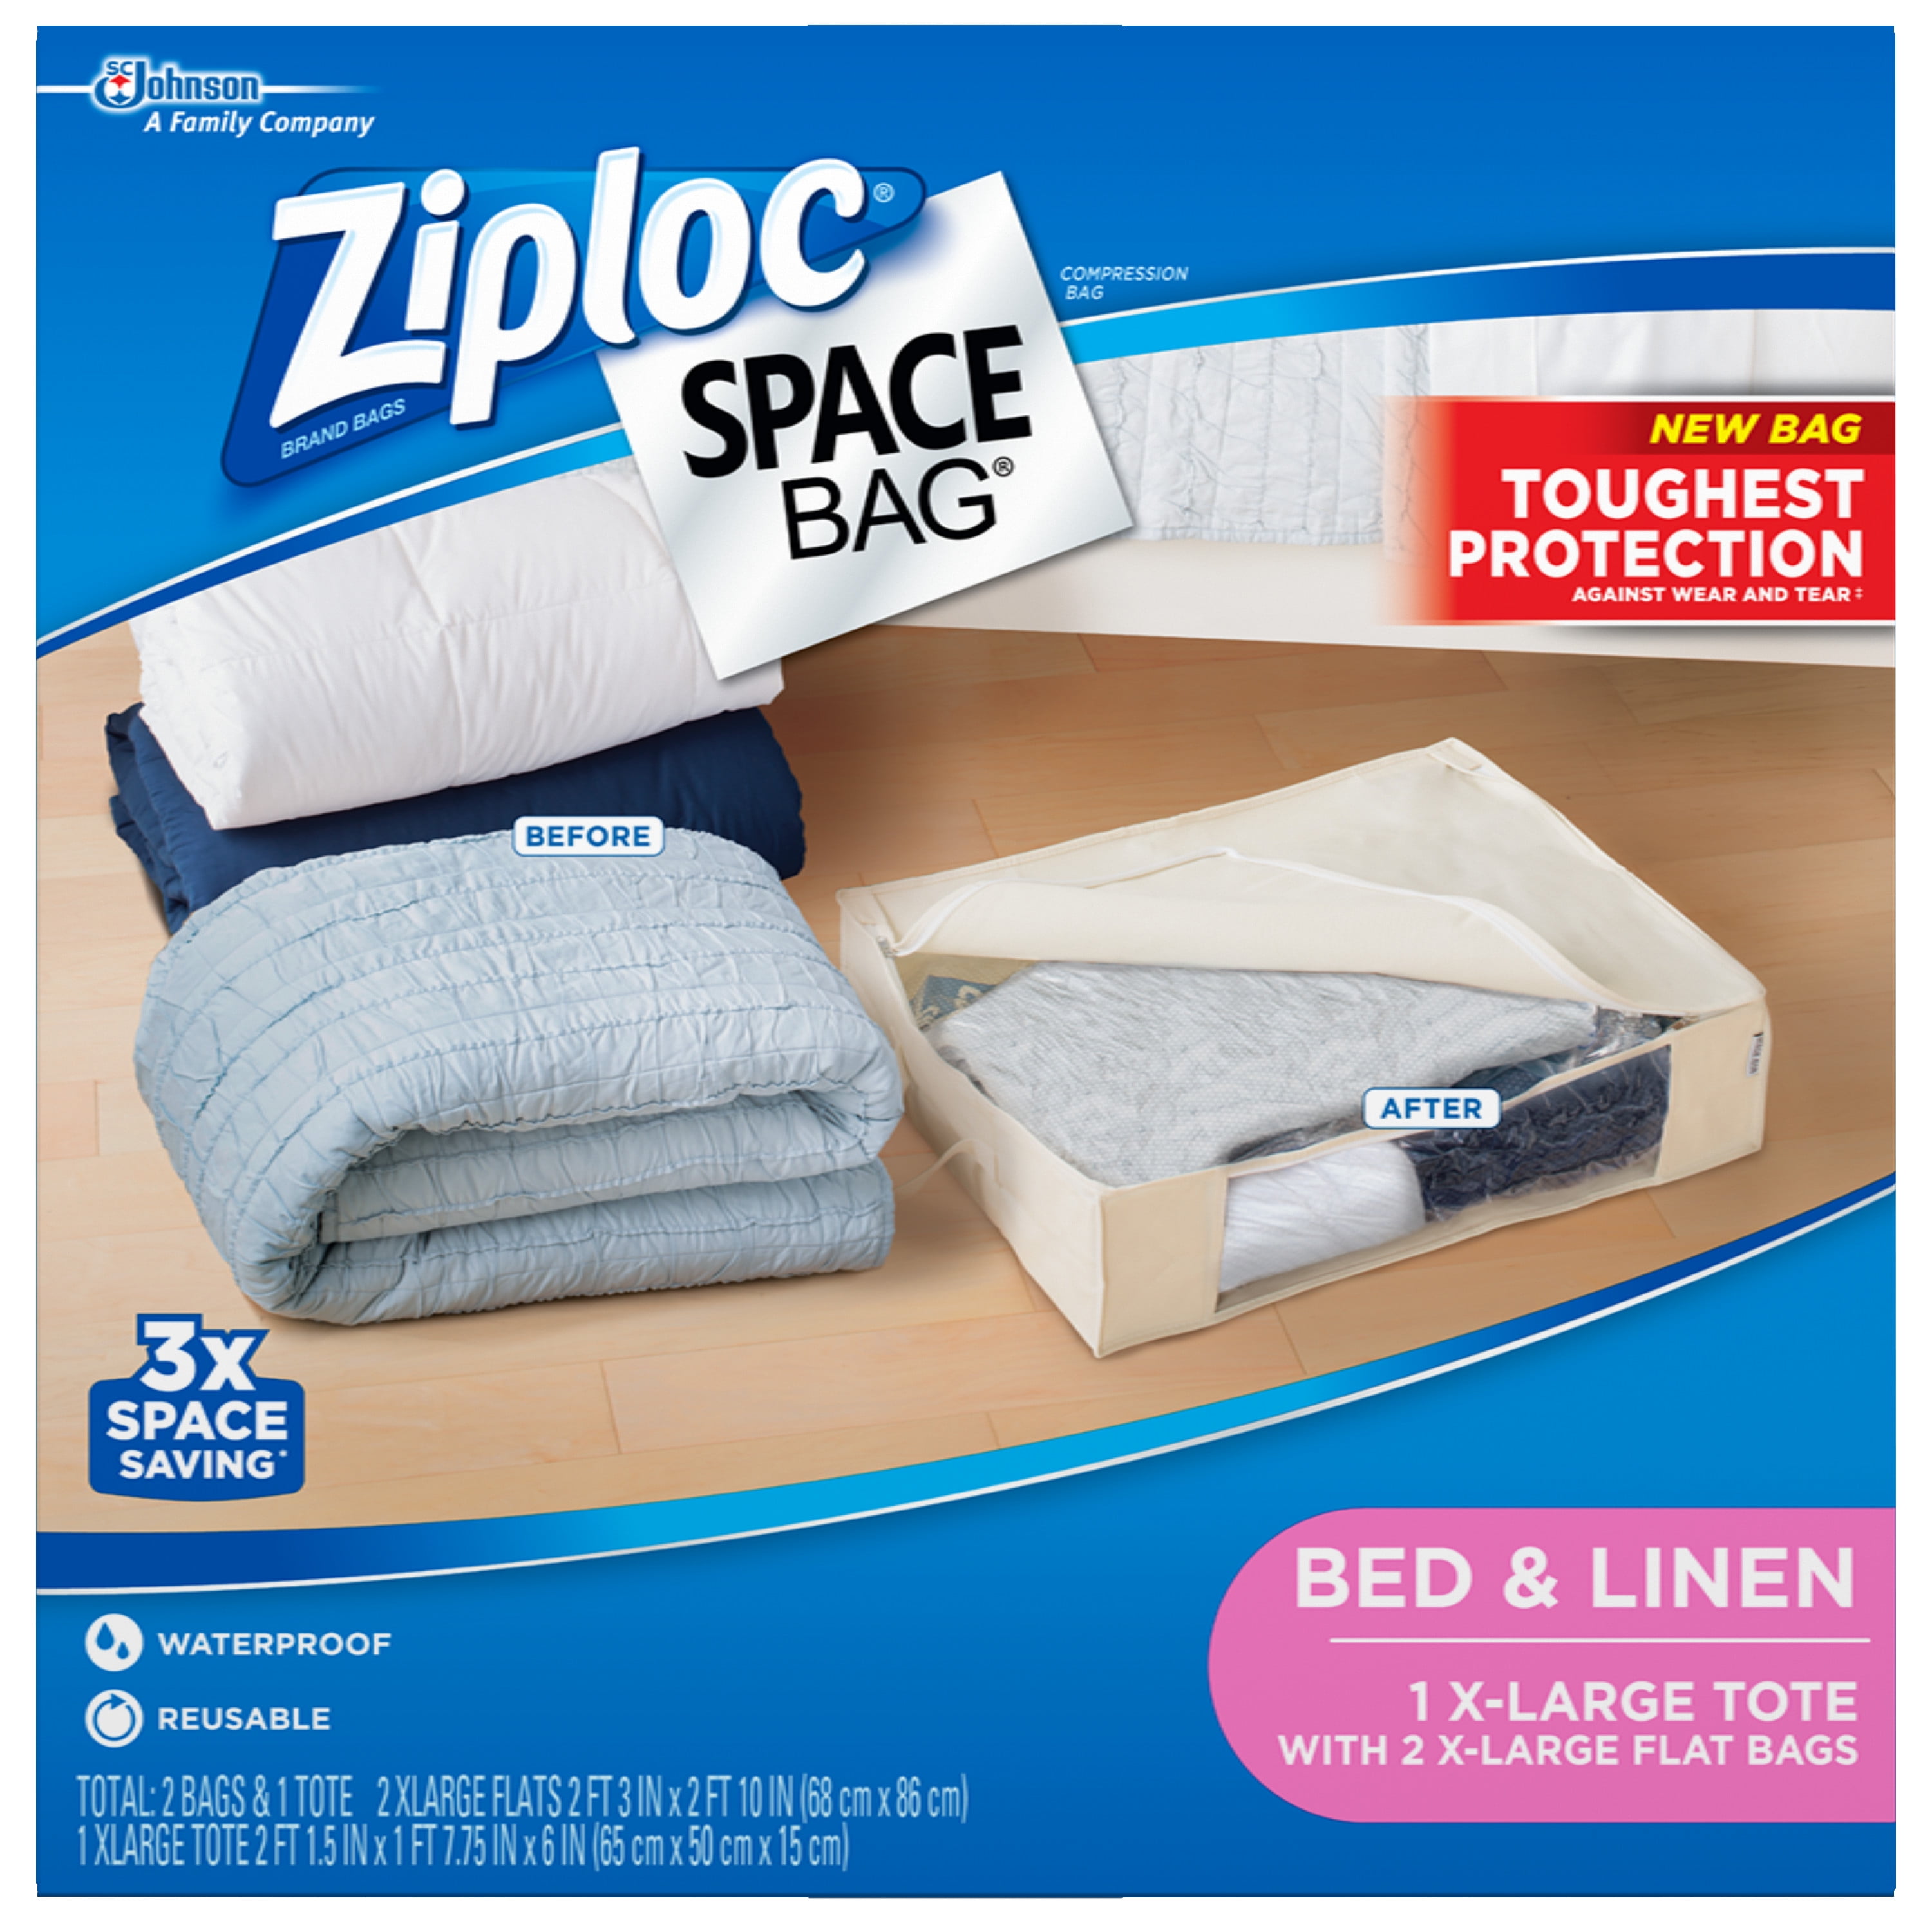 Johnson Ziploc Brand Bags Space Bag Flat Bag Organizer System